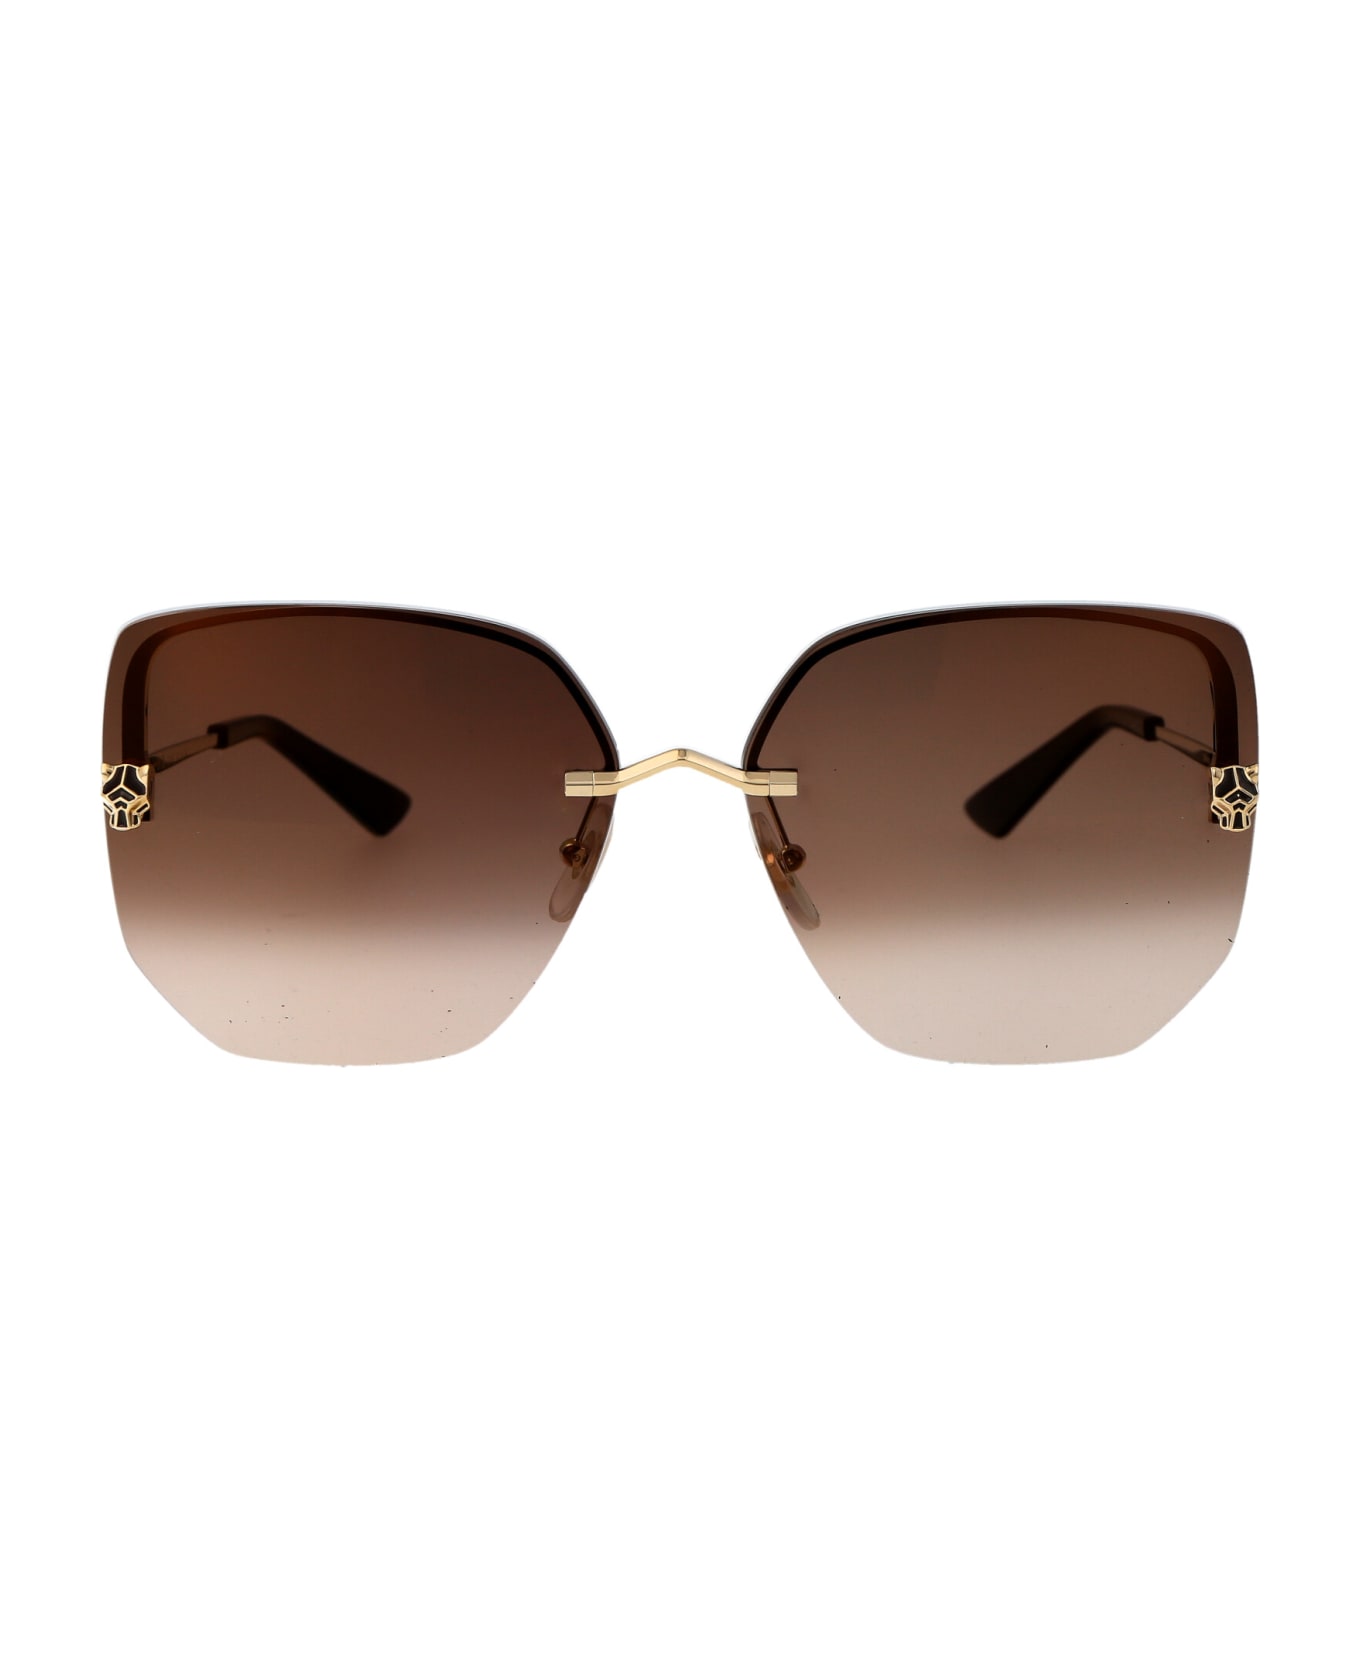 Cartier Eyewear Ct0432s Sunglasses - 002 GOLD GOLD BROWN